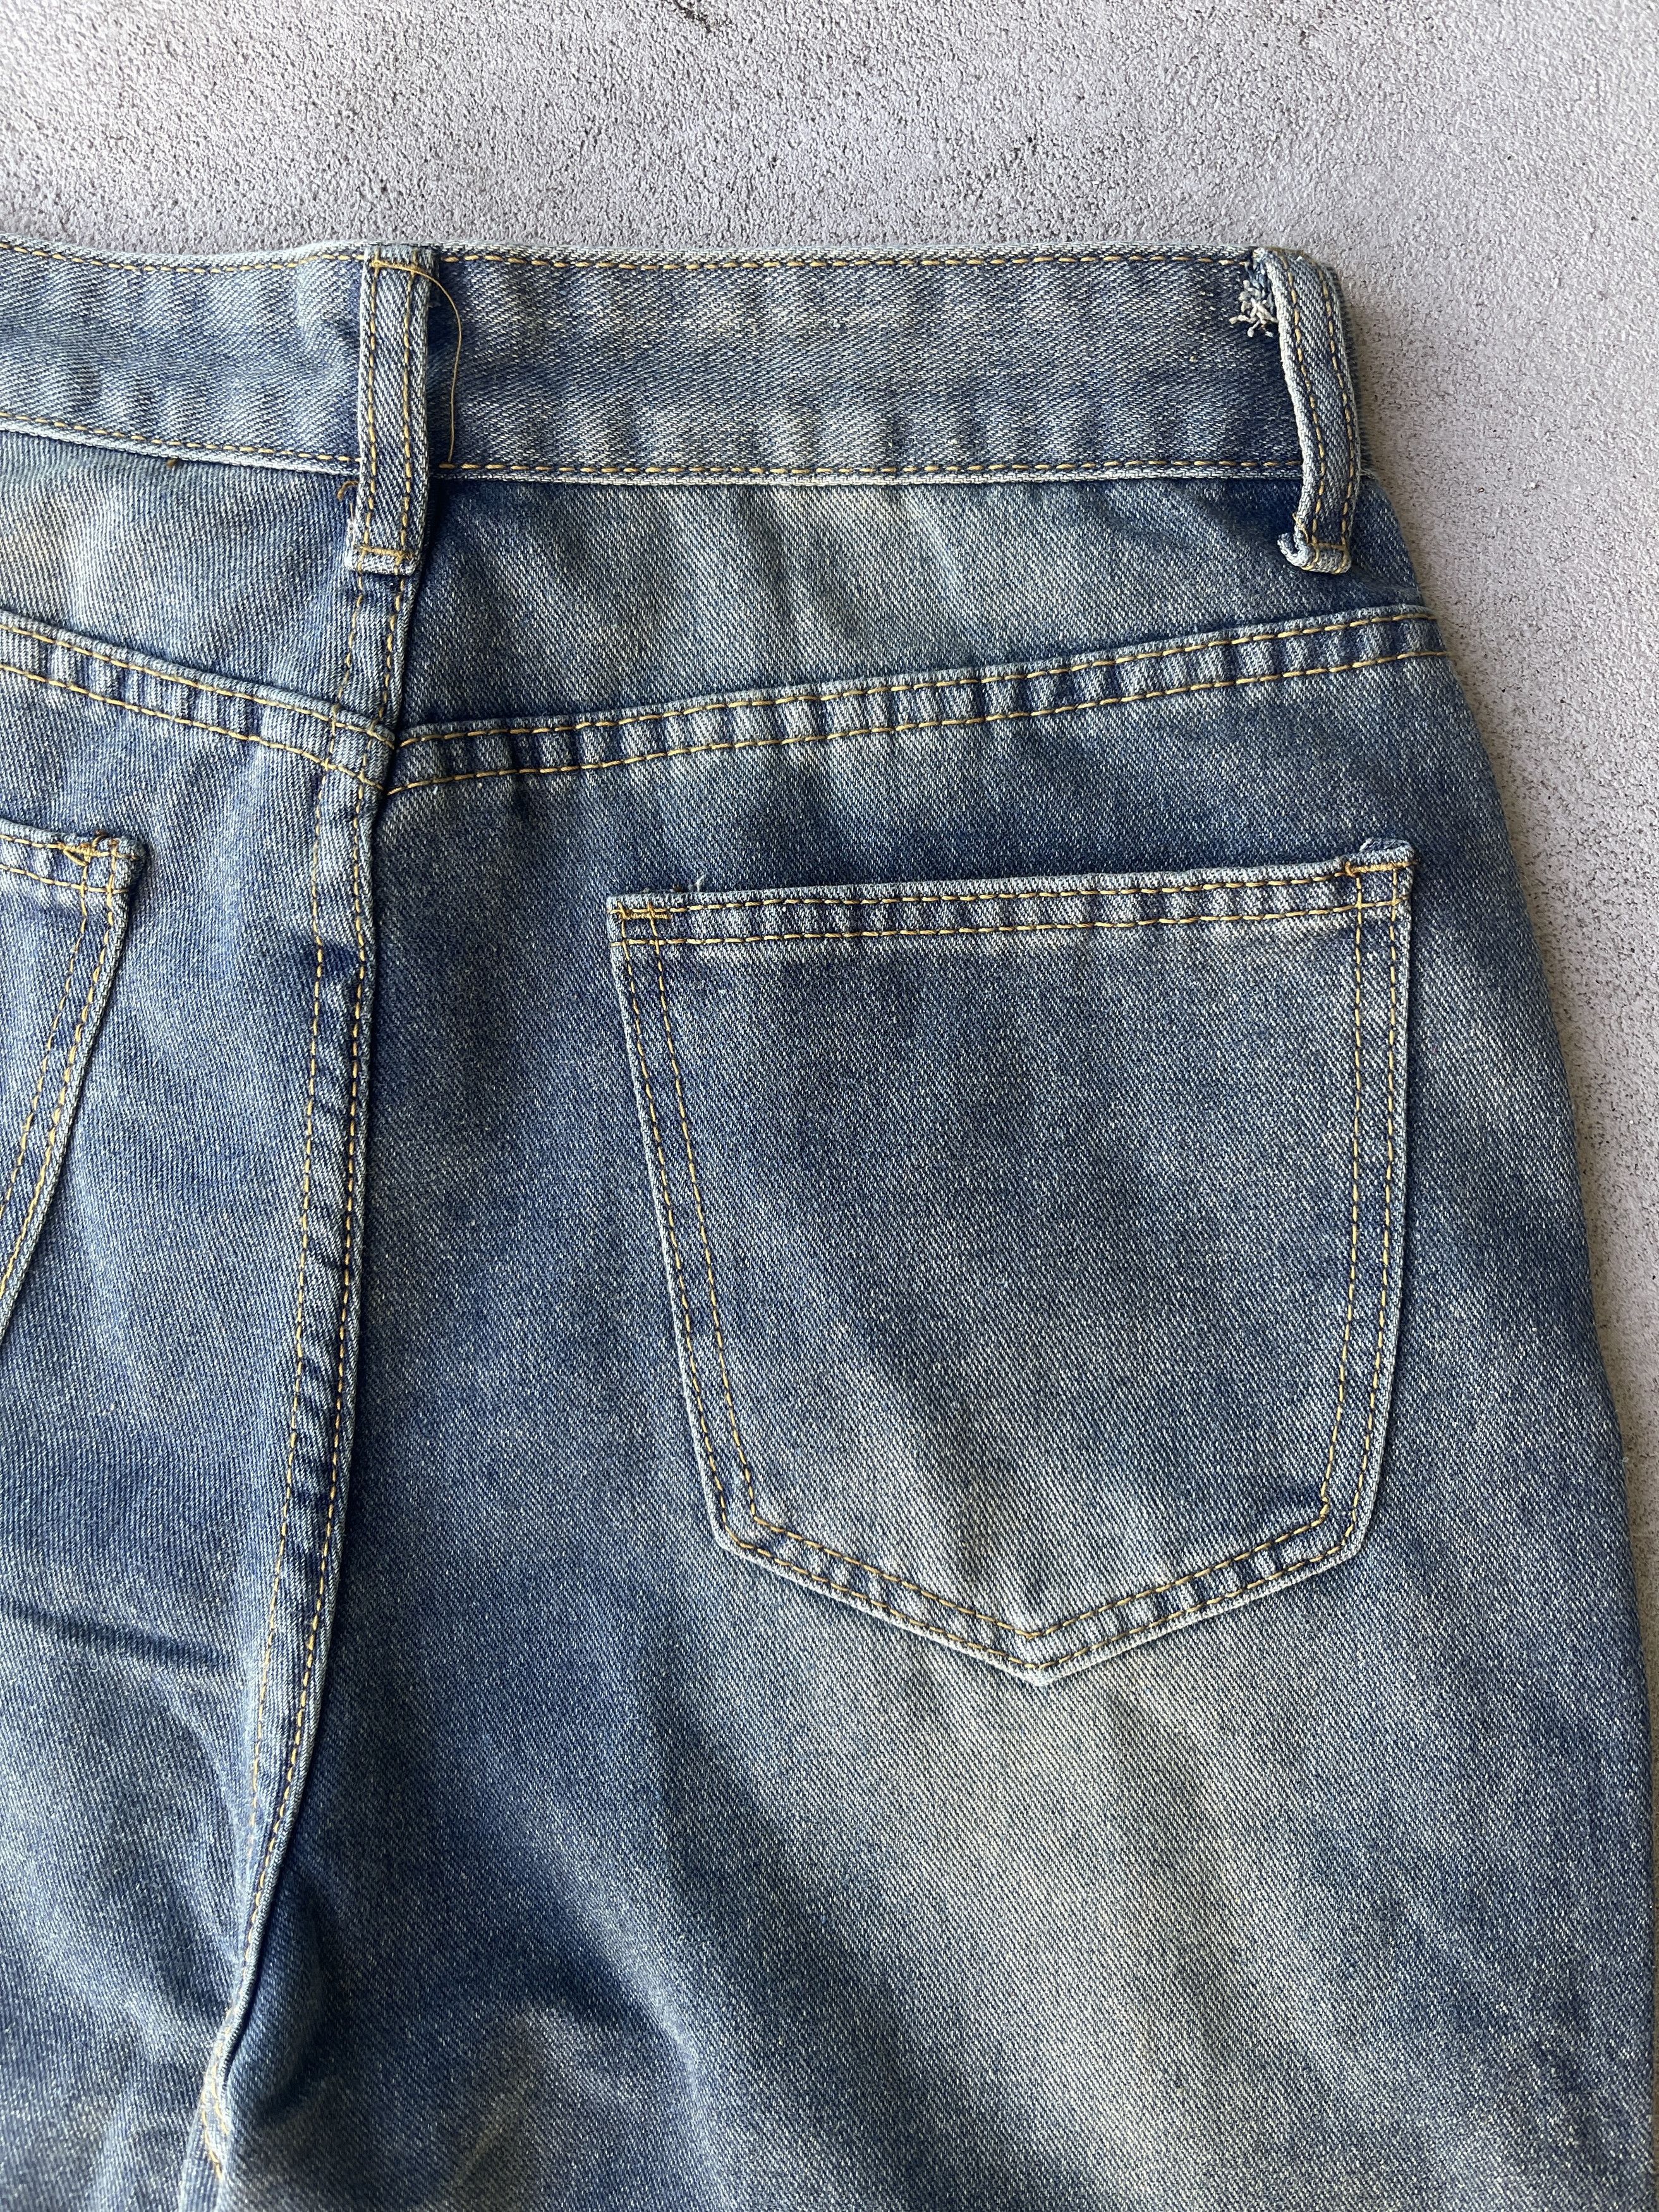 Vintage 2000s Japanese Americana Worker Denim Jeans - 4